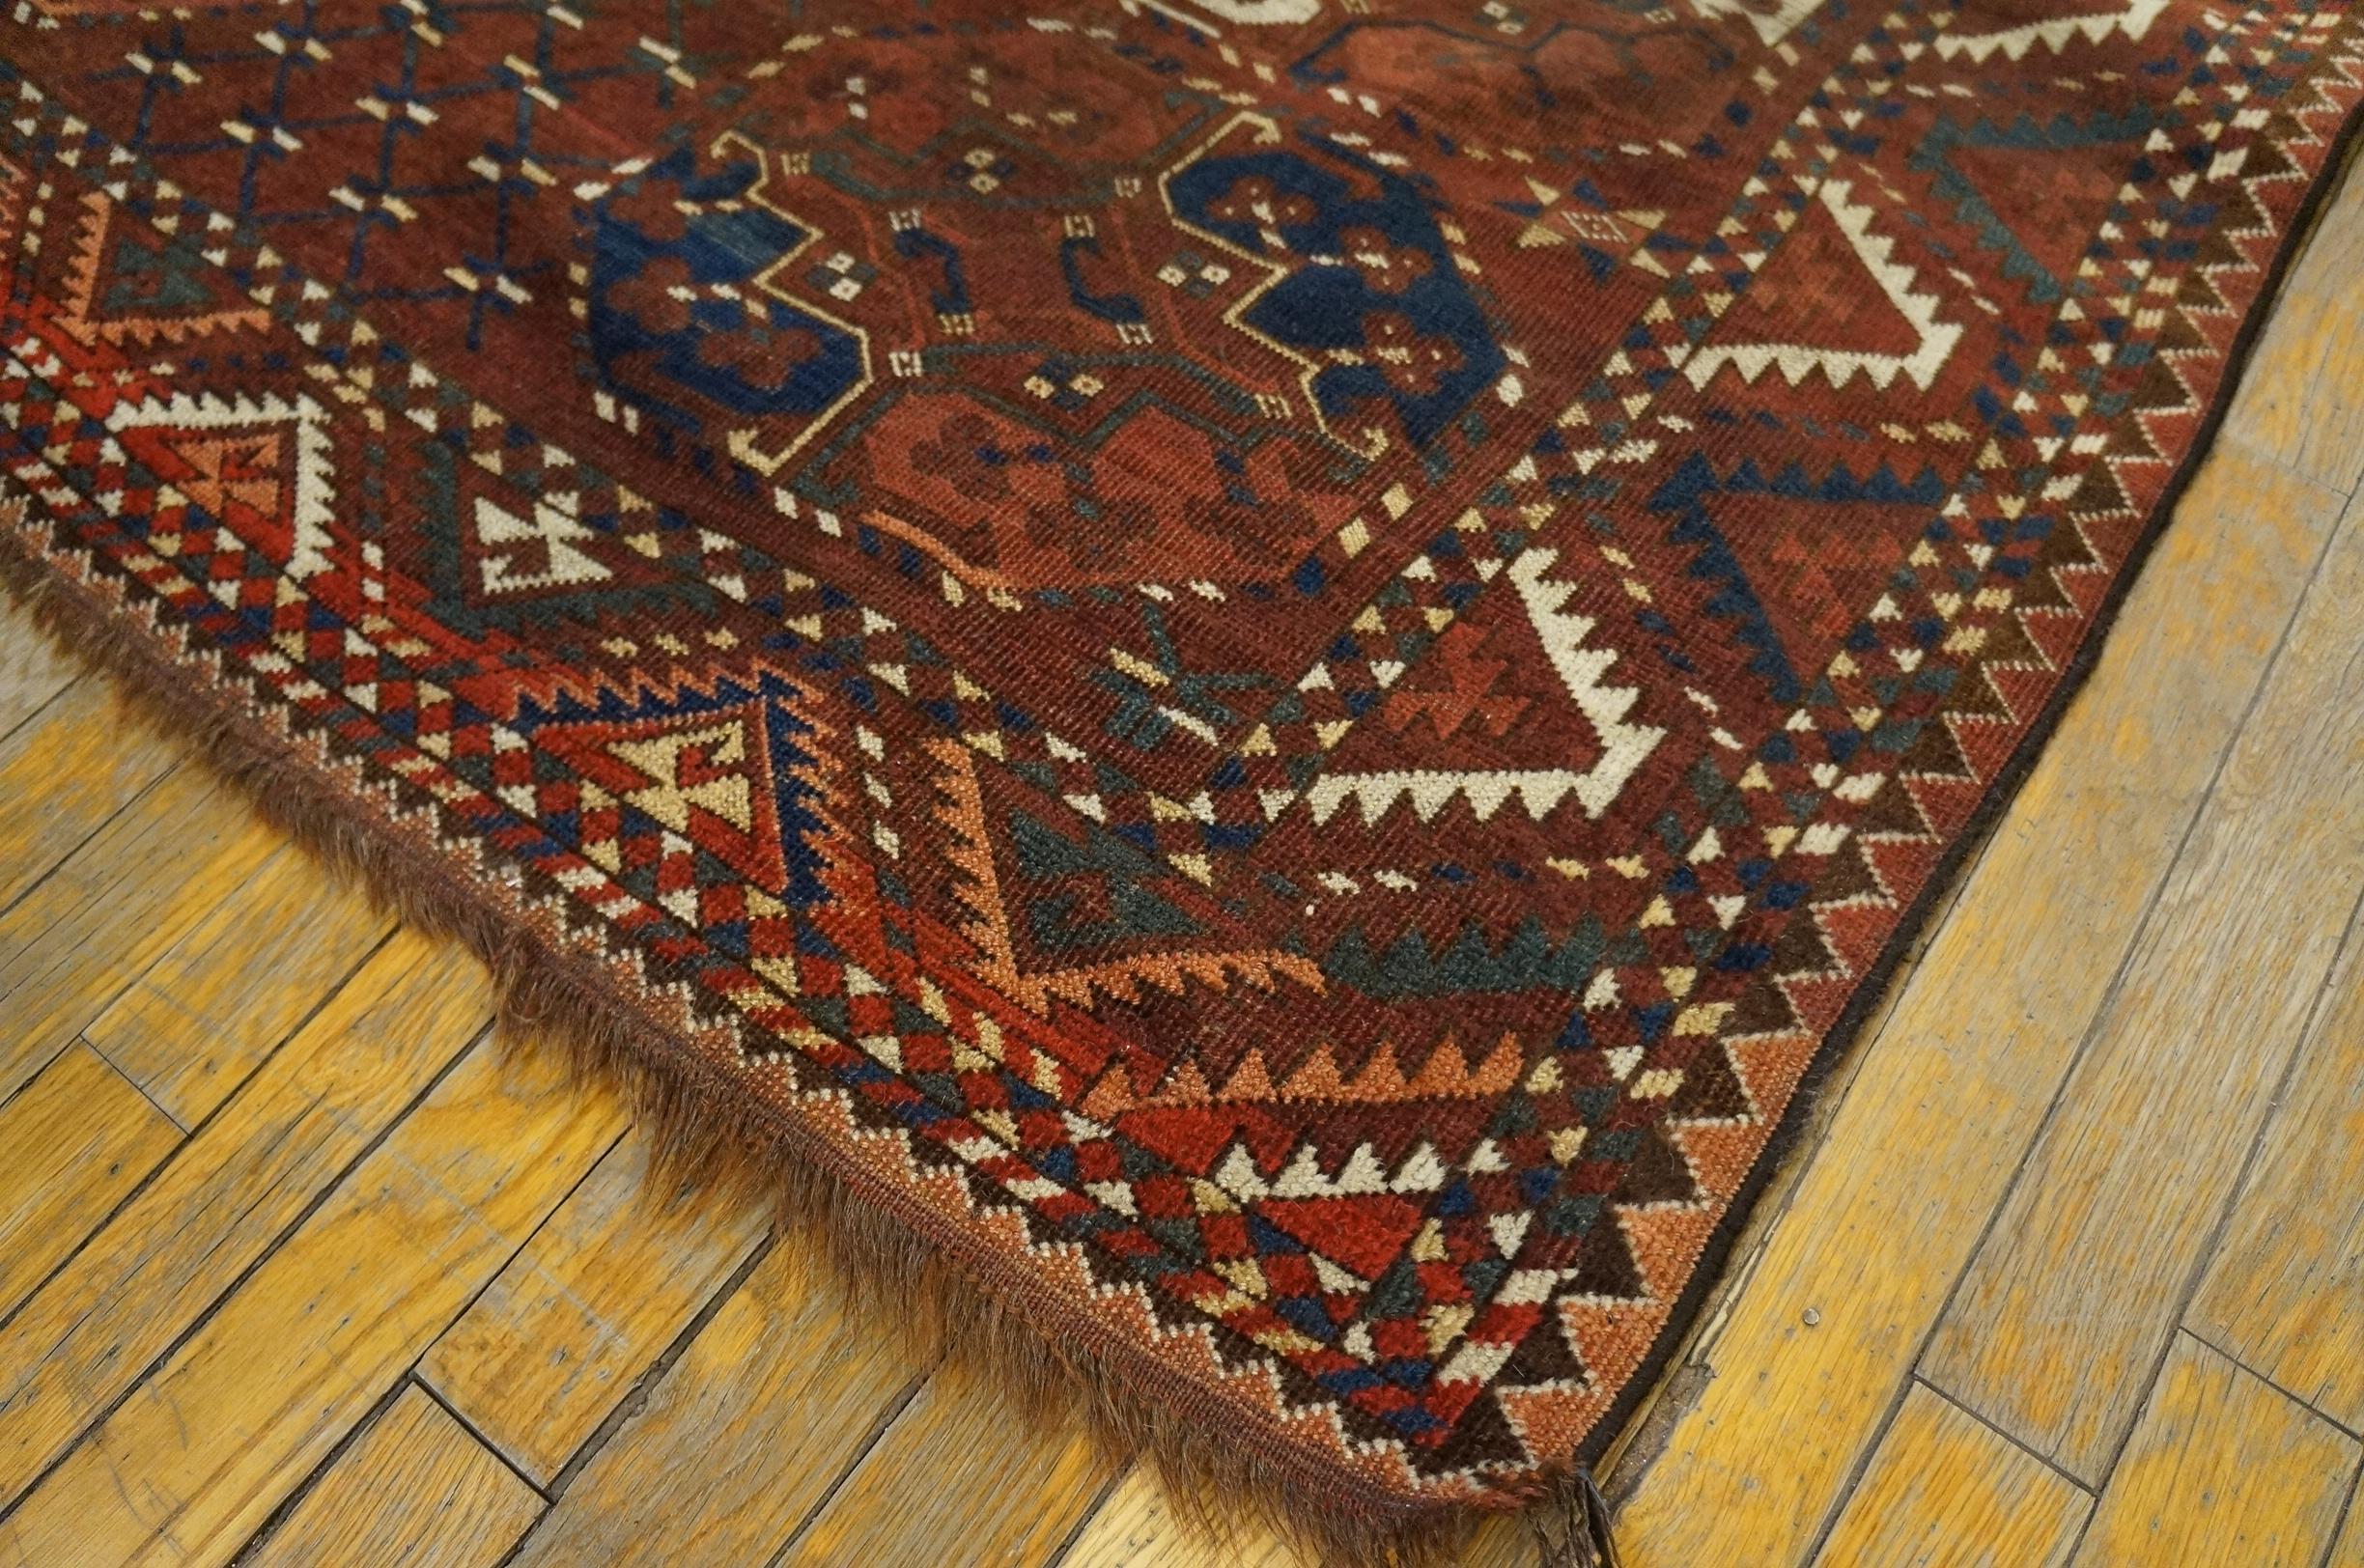 Afghan Mid 19th Century Central Asian Ersari - Beshir Main Carpet (6'6